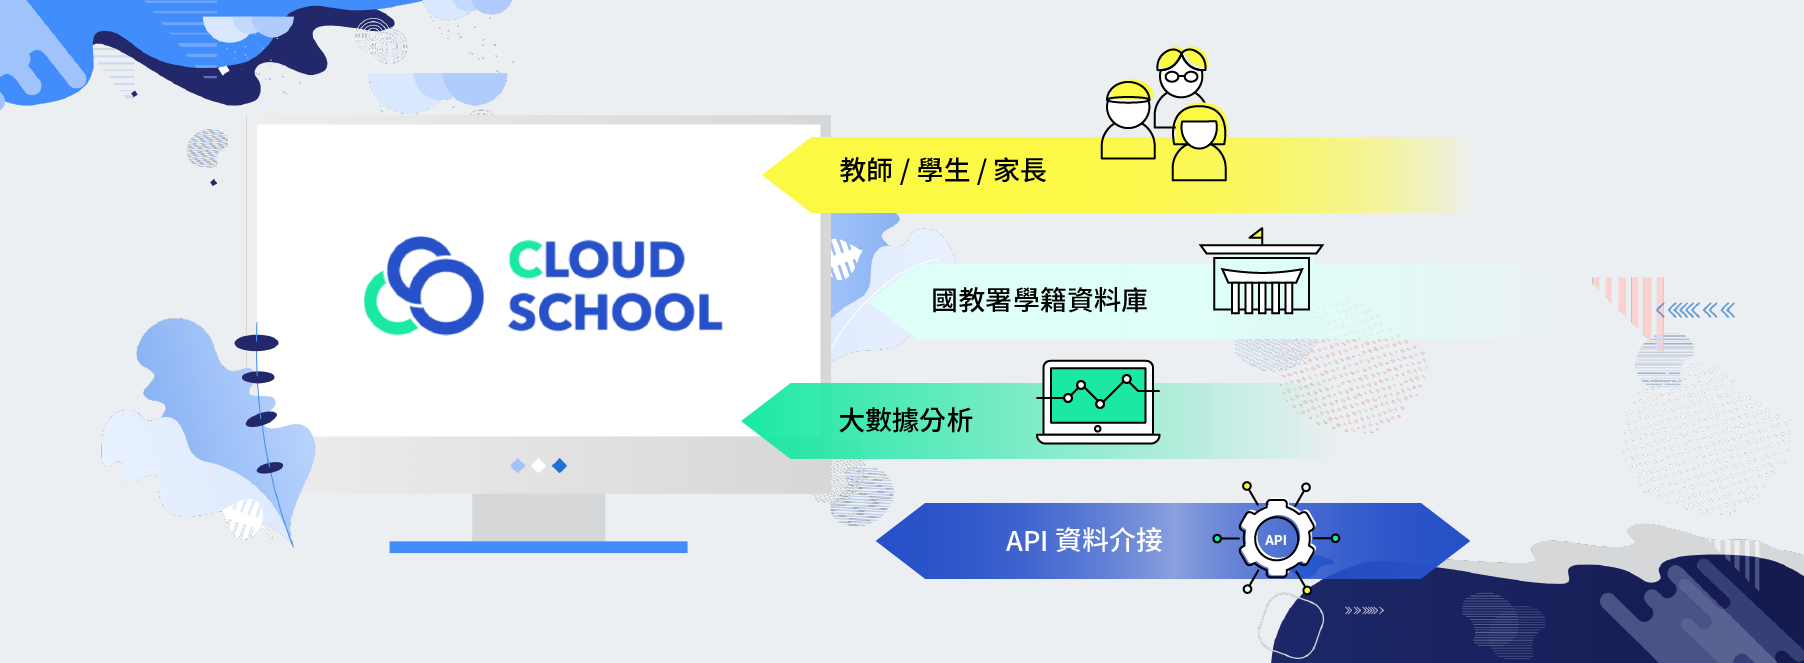 Cloud School 雲端校務系統形象圖